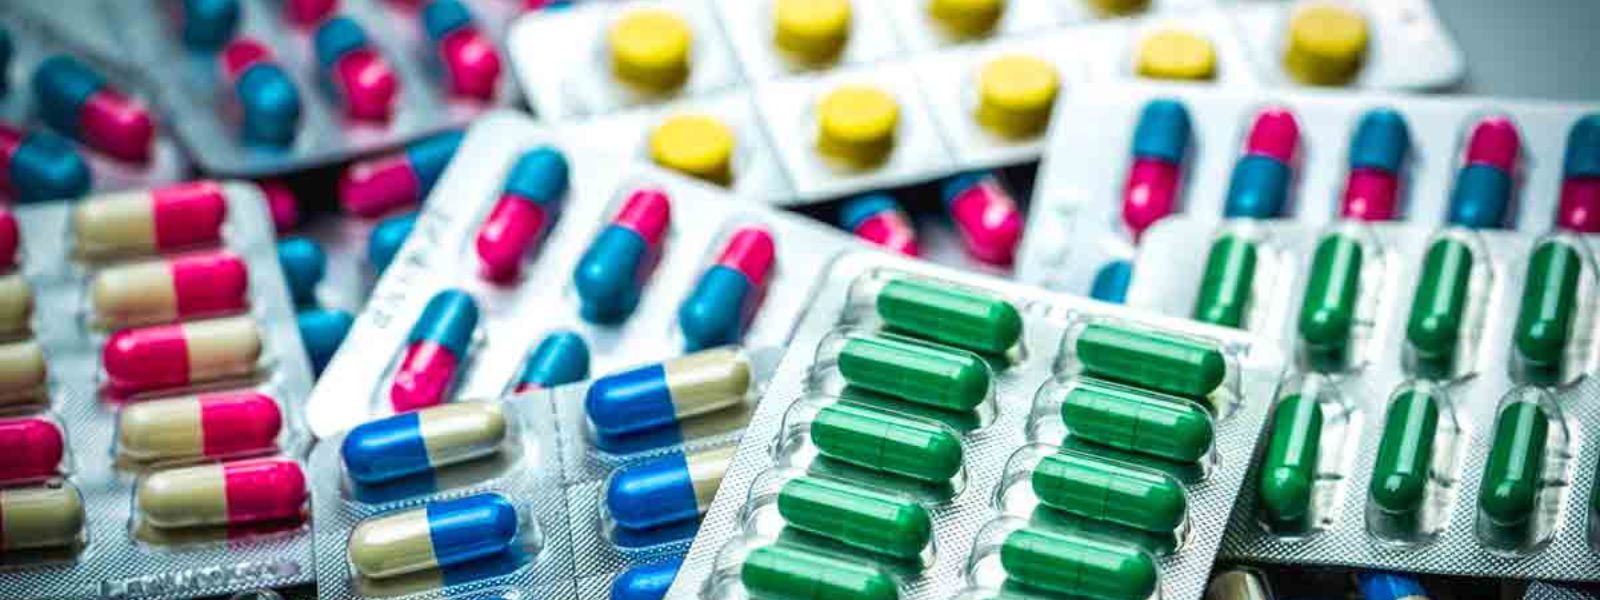 Colombo Hospital Antibiotic Use Probe